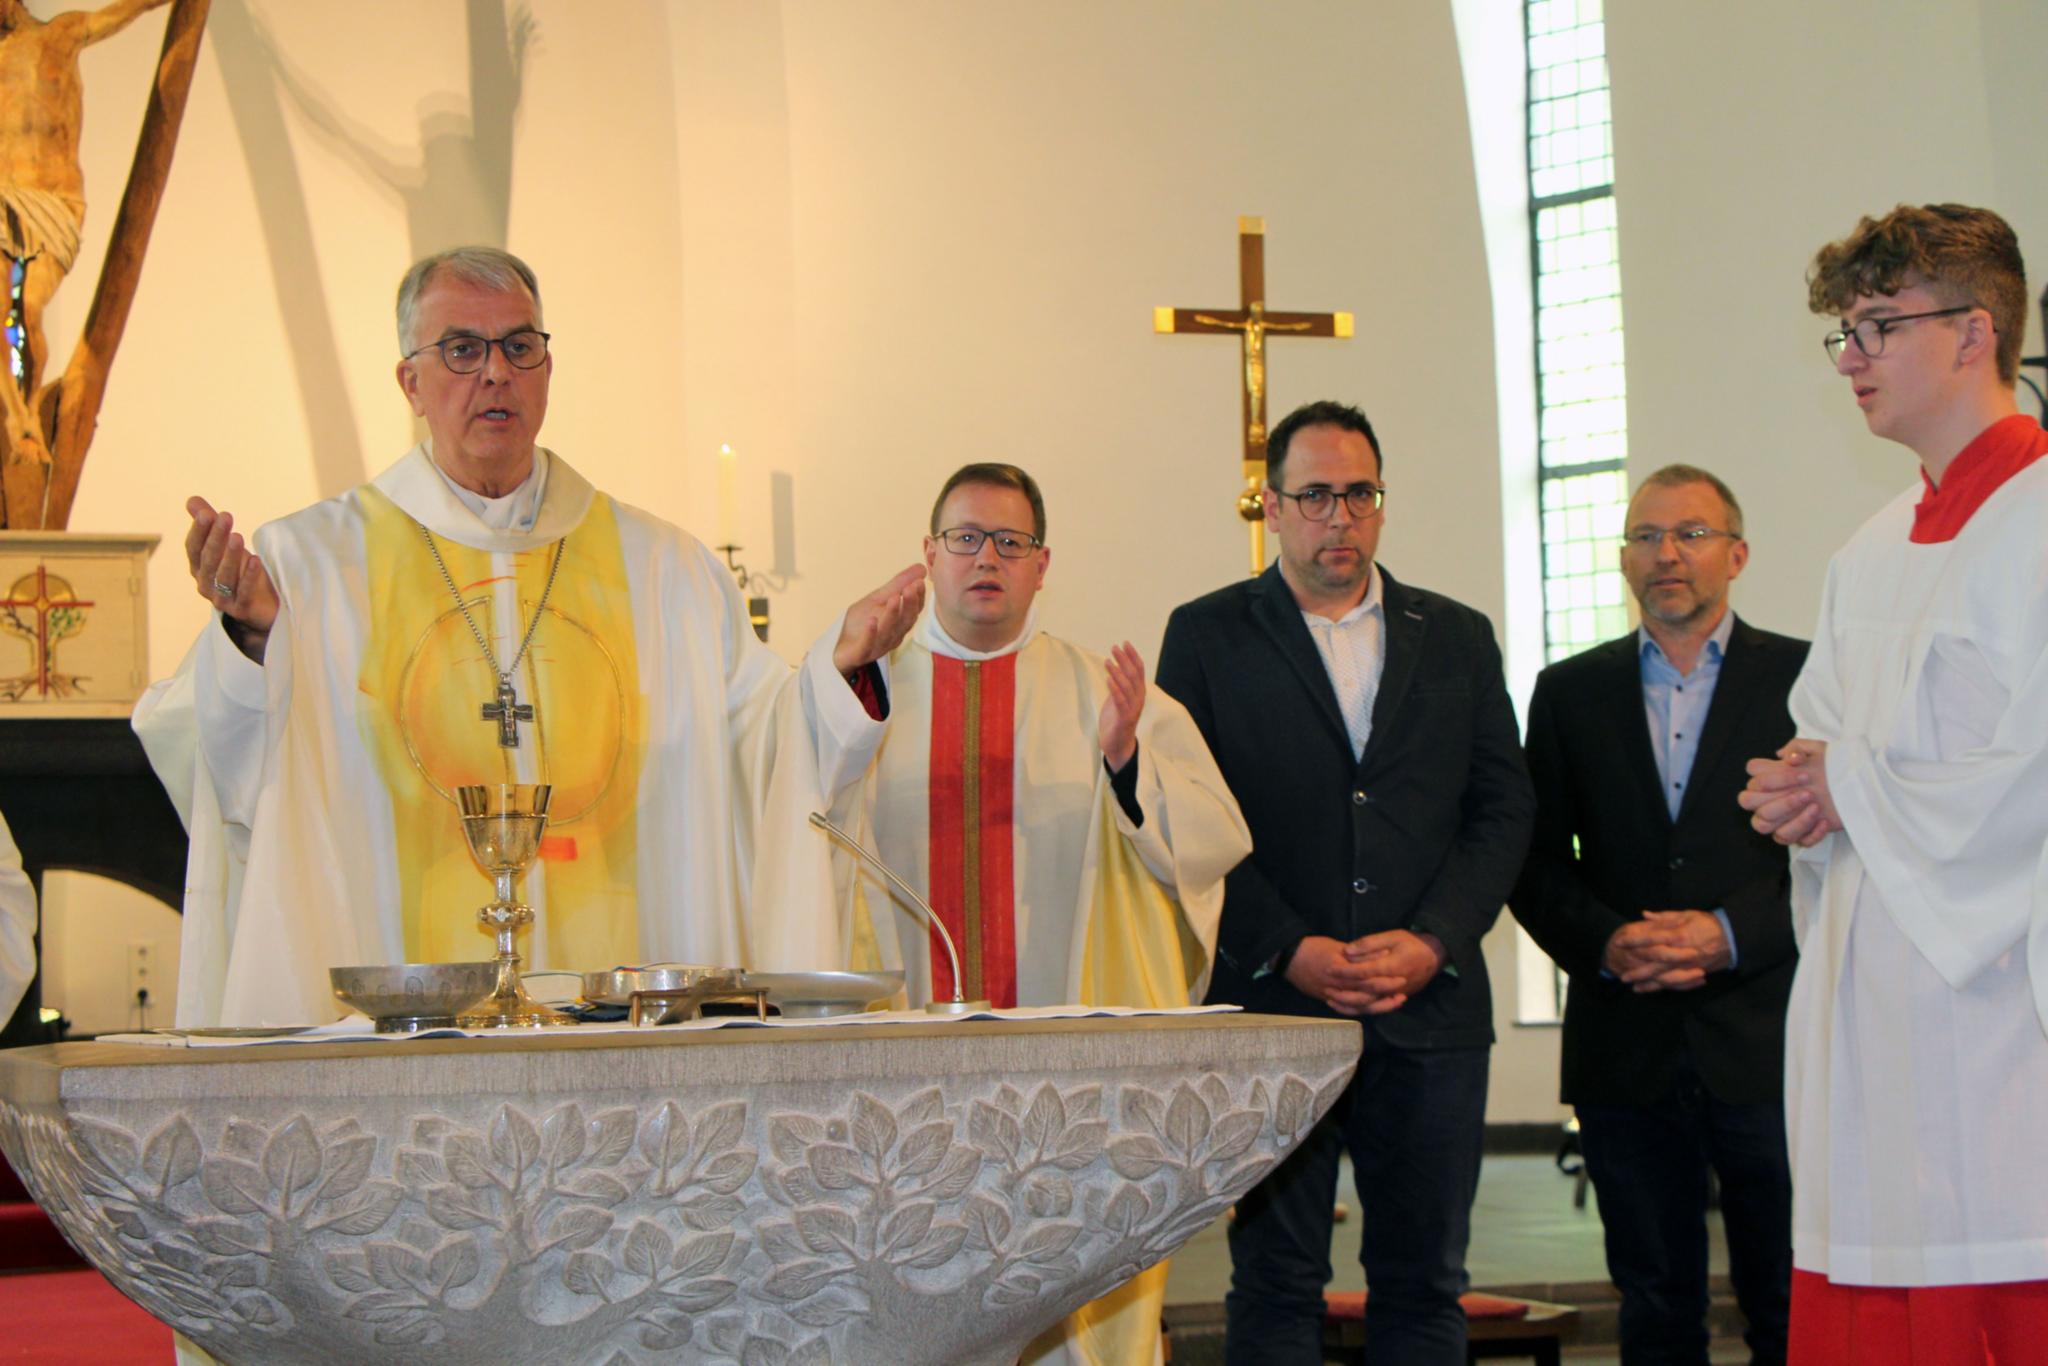 Am Altar der St. Nikolauskirche: (von links) Weihbischof Peters, Dr. Jonas Weller, Nico Sartoris, Stefan Becker